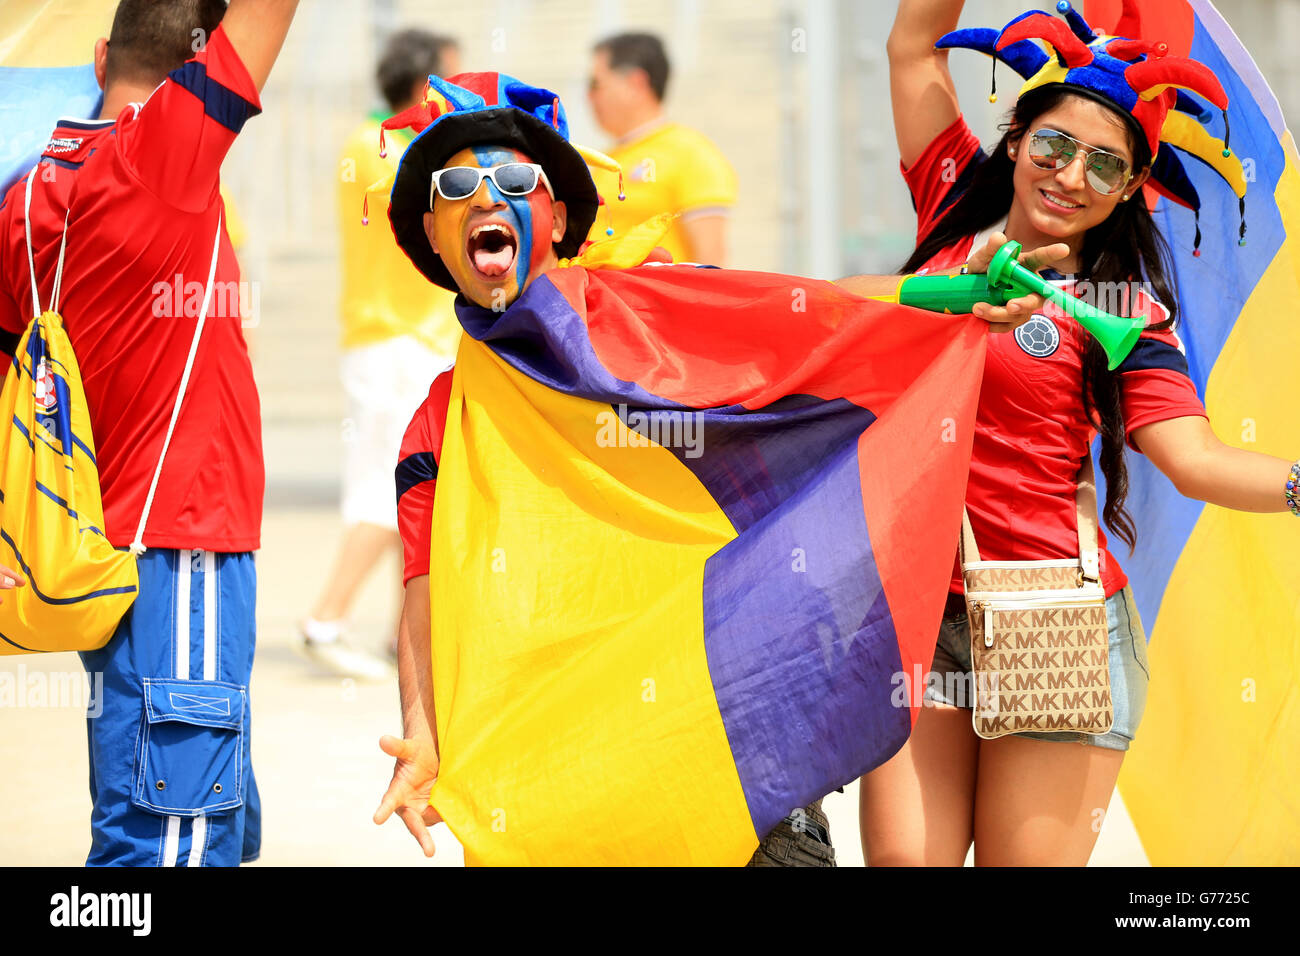 Soccer - FIFA World Cup 2014 - Quarter Final - Brazil v Colombia - Estadio Castelao Stock Photo